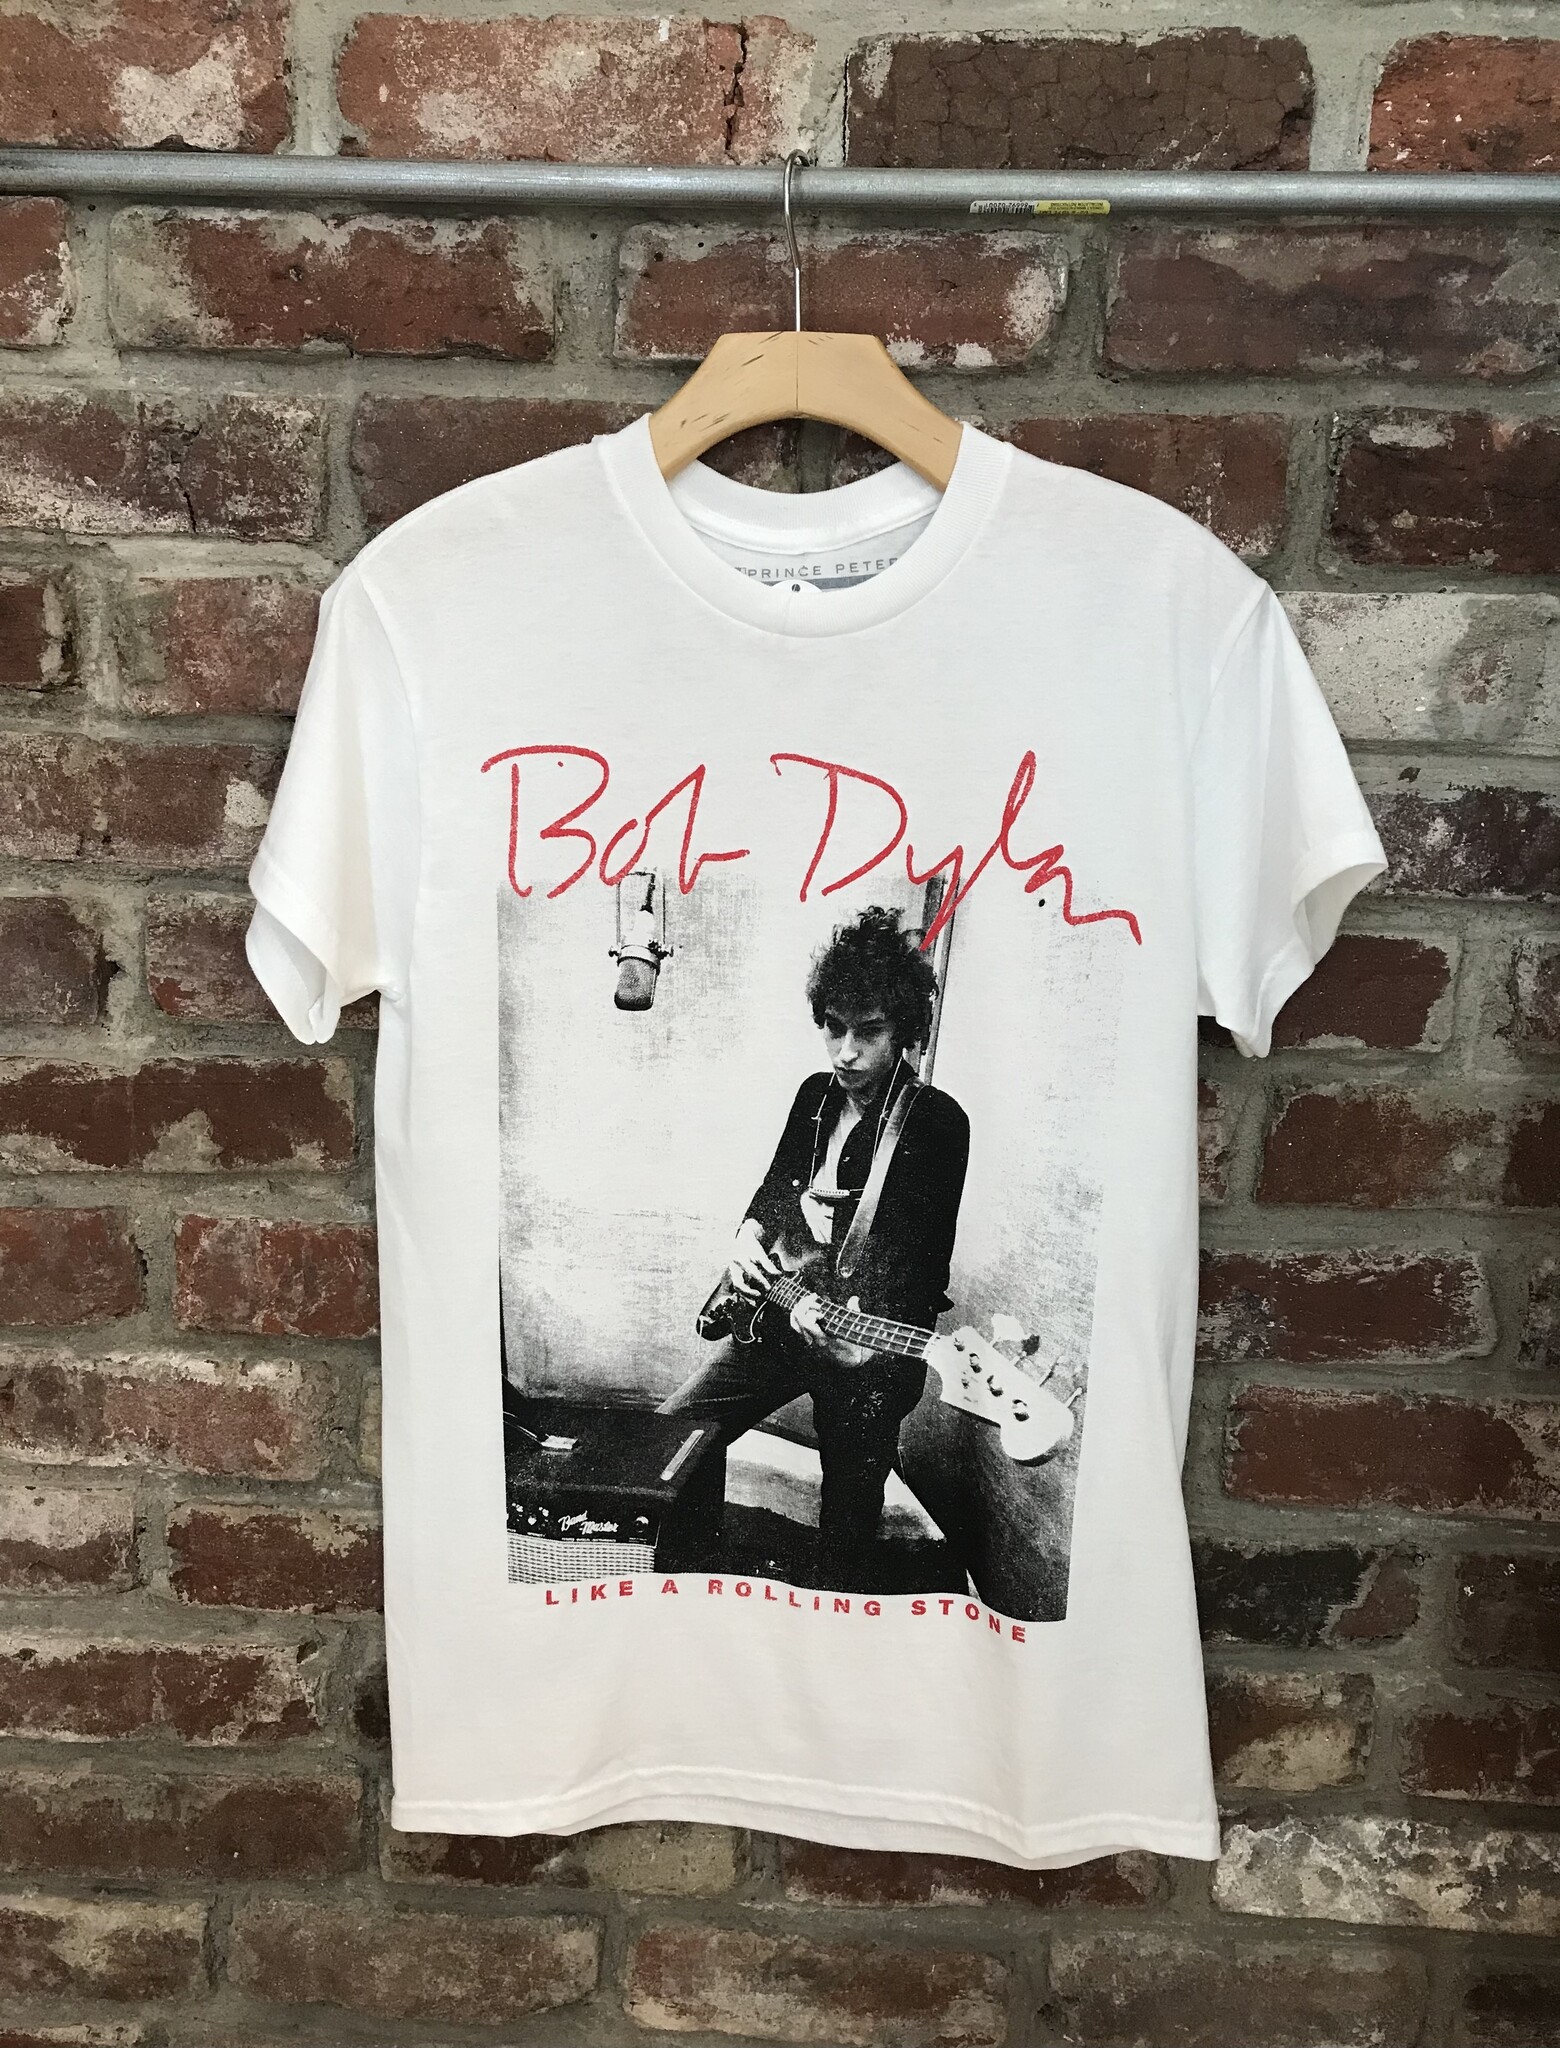 Prince Peter Bob Dylan "Rolling Stone" Tee